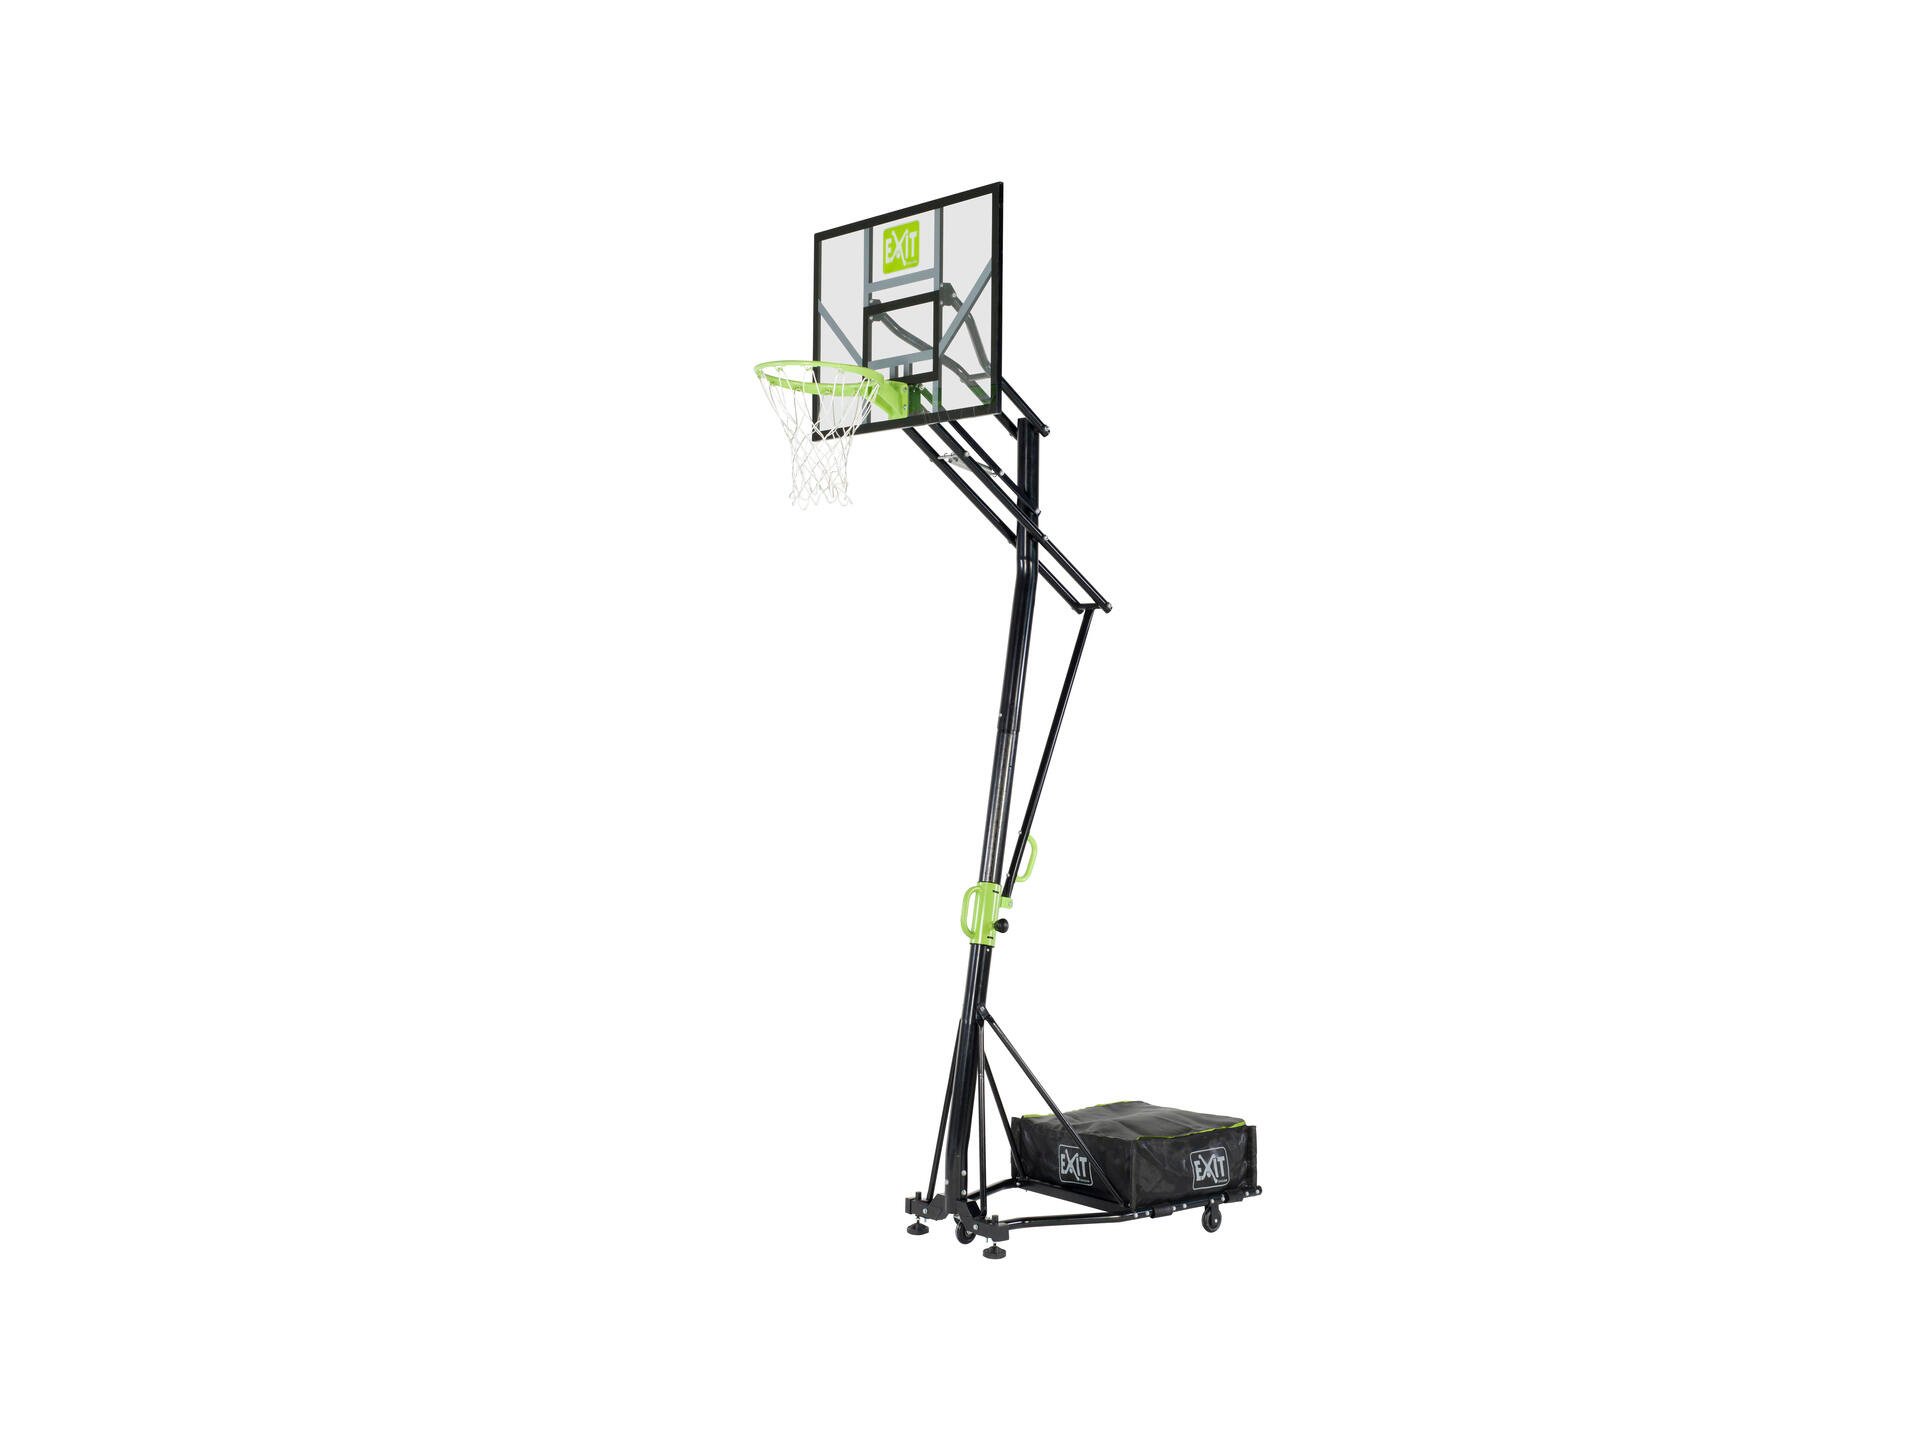 Exit Toys Galaxy basketbalbord + wielen groen/zwart